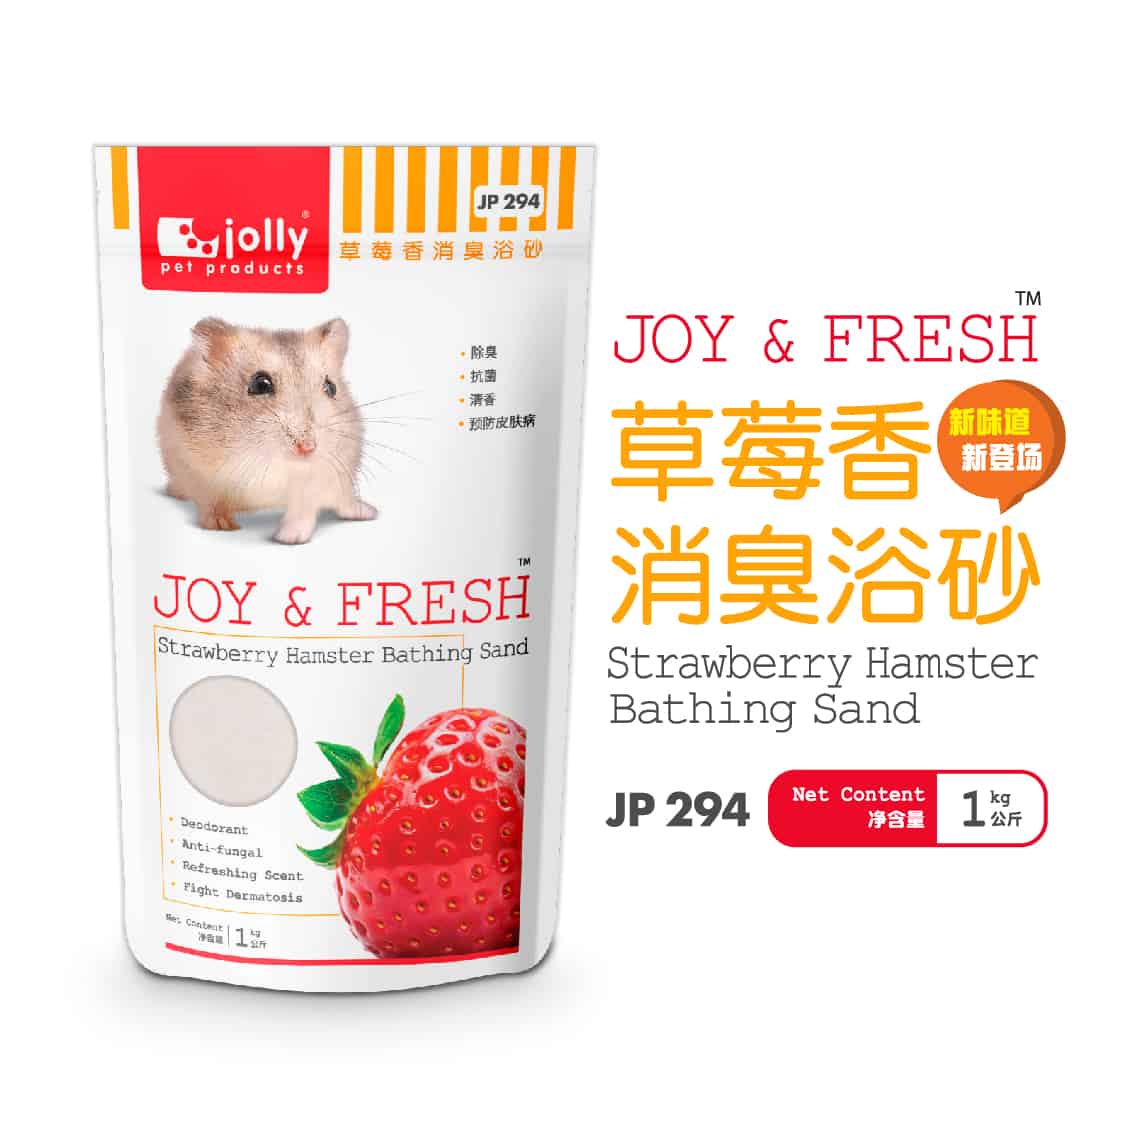 Jolly JP294 Joy & Fresh Strawberry Hamster Bathing Sand 1kg